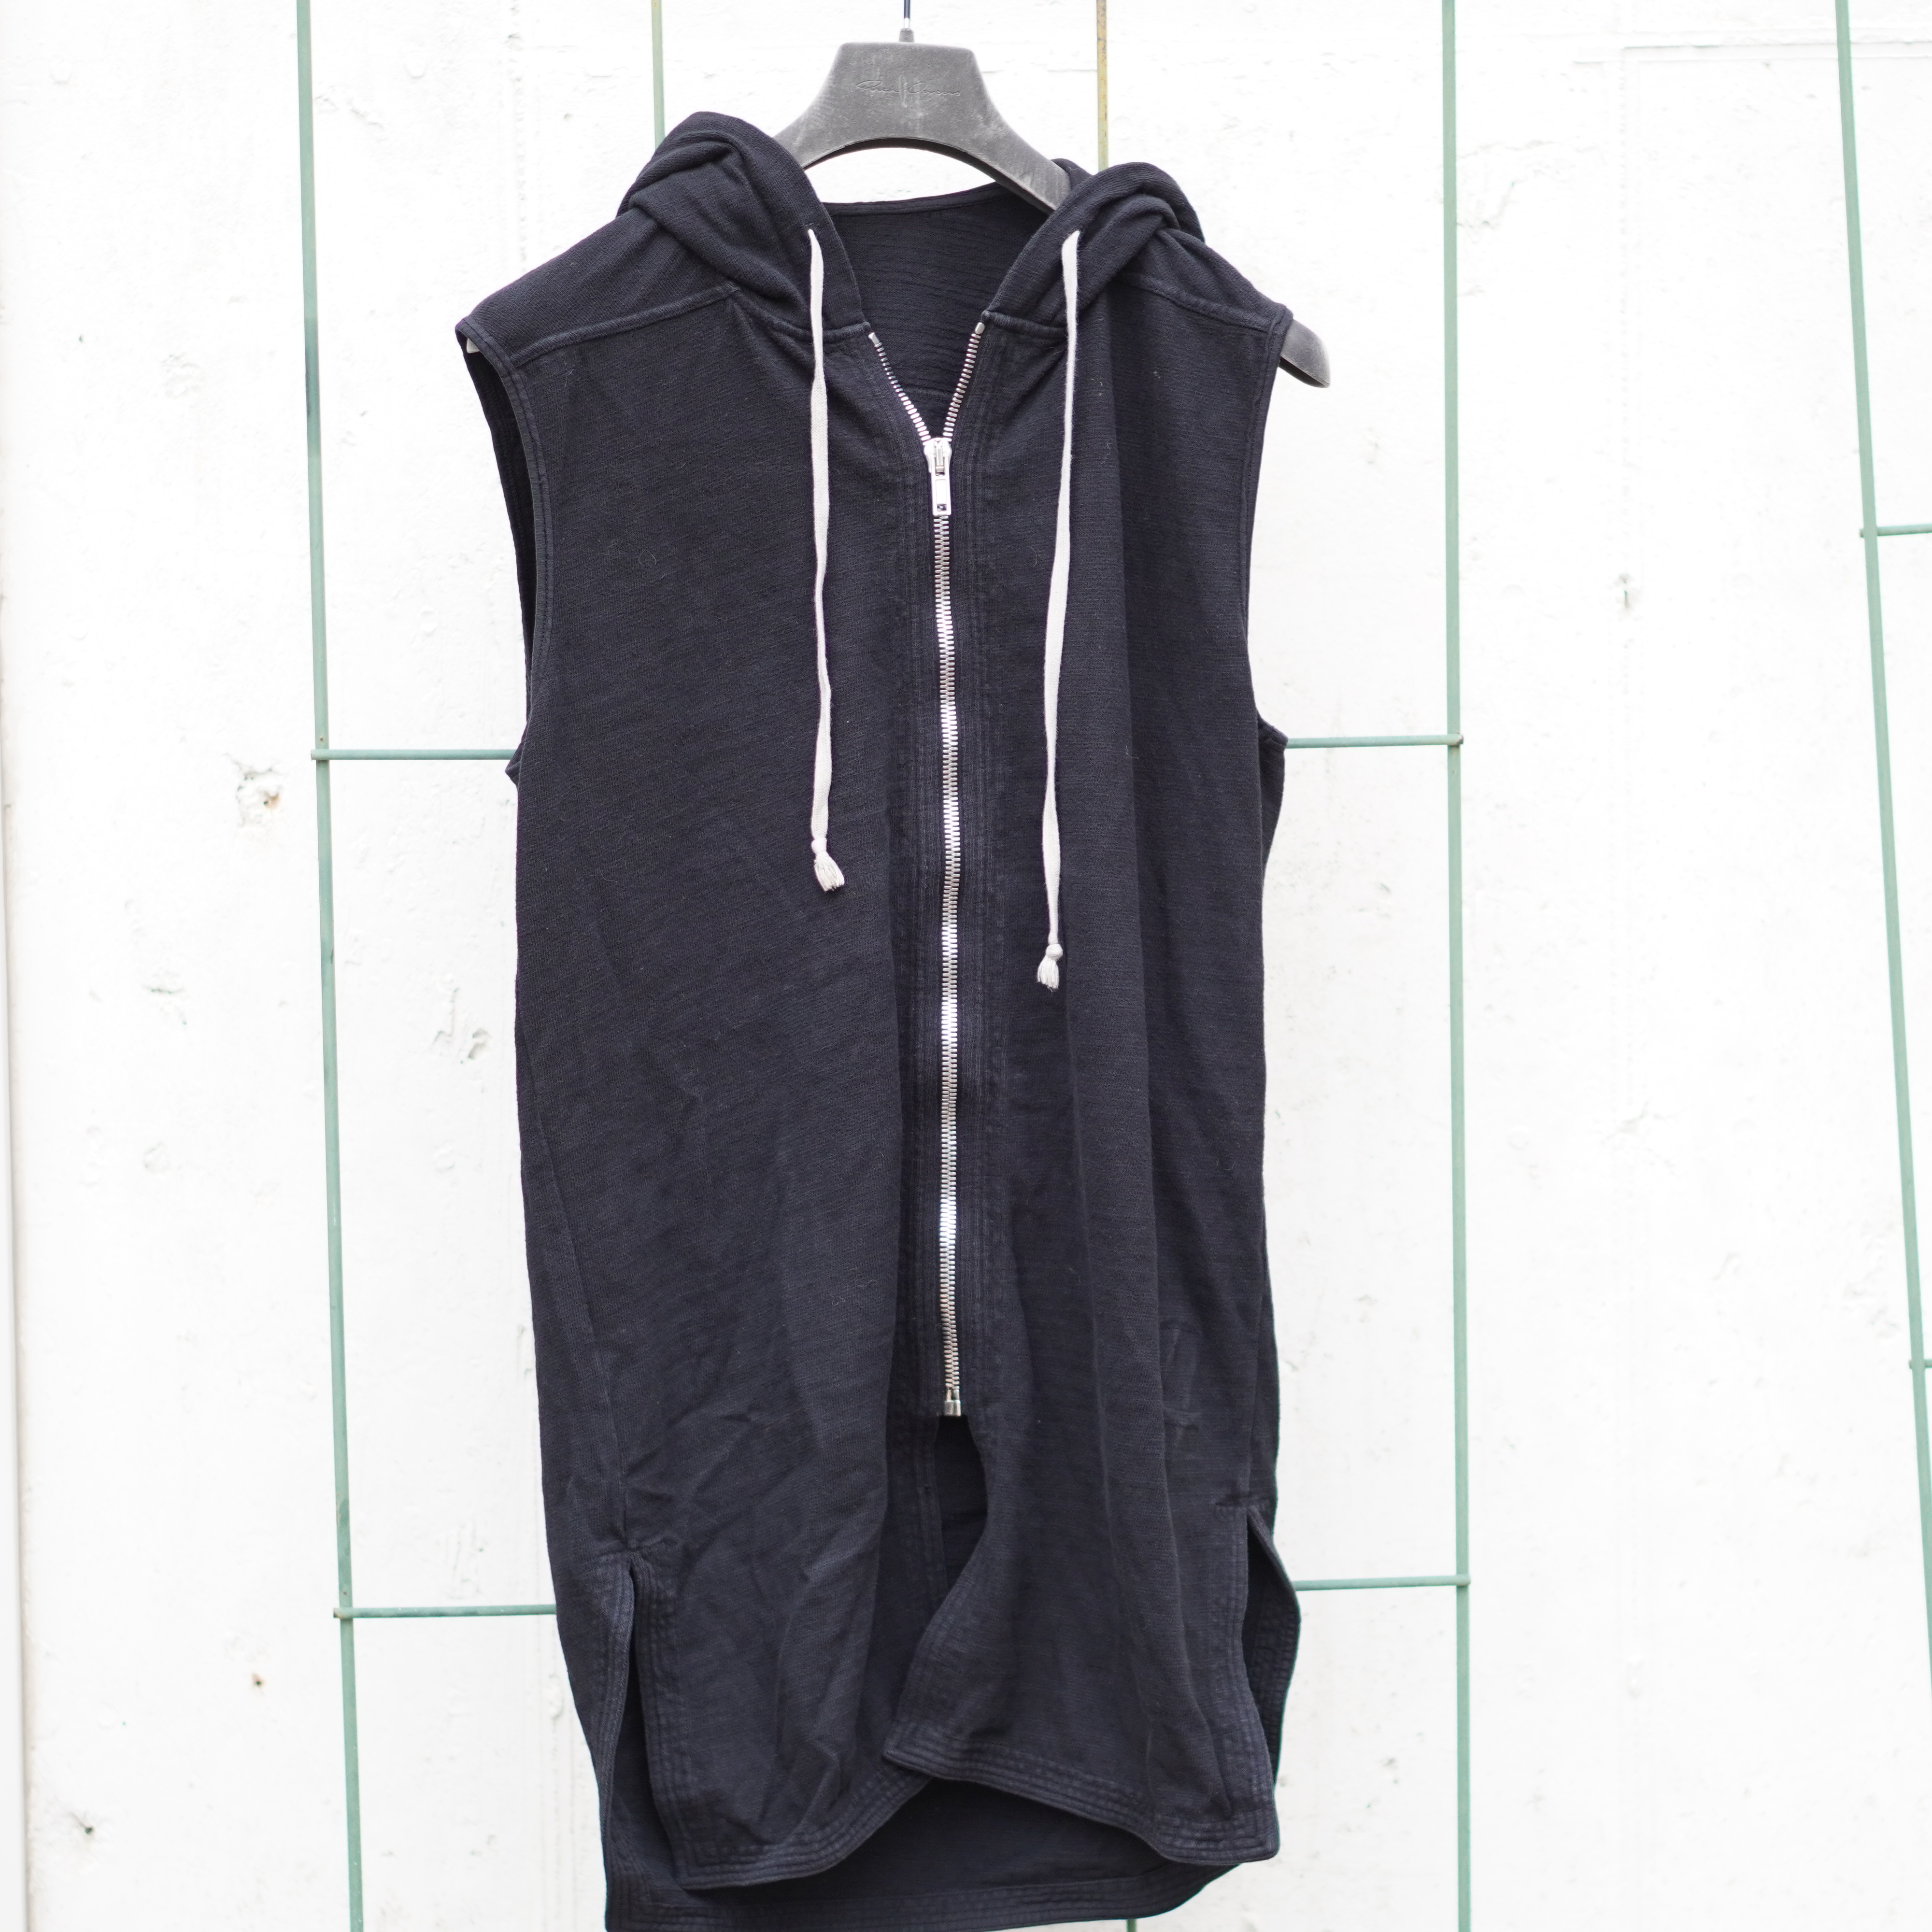 Black Zip Up Sleeveless Jacket Hoodie Cotton - Medium - 1